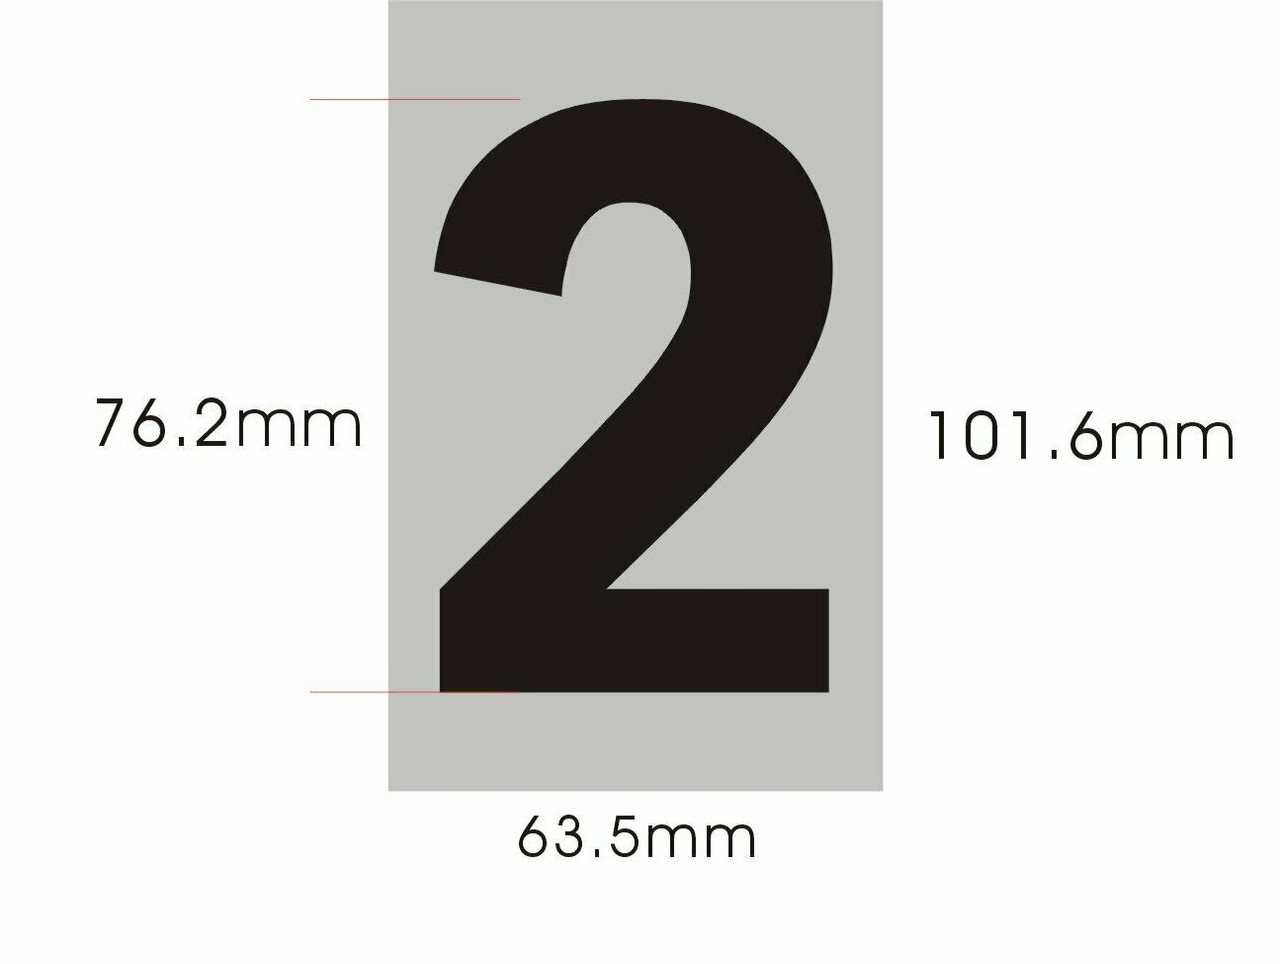 Brush Aluminium, Size 2.5X4 - Porte D'argent lin Apartment Number Sign Two 2 